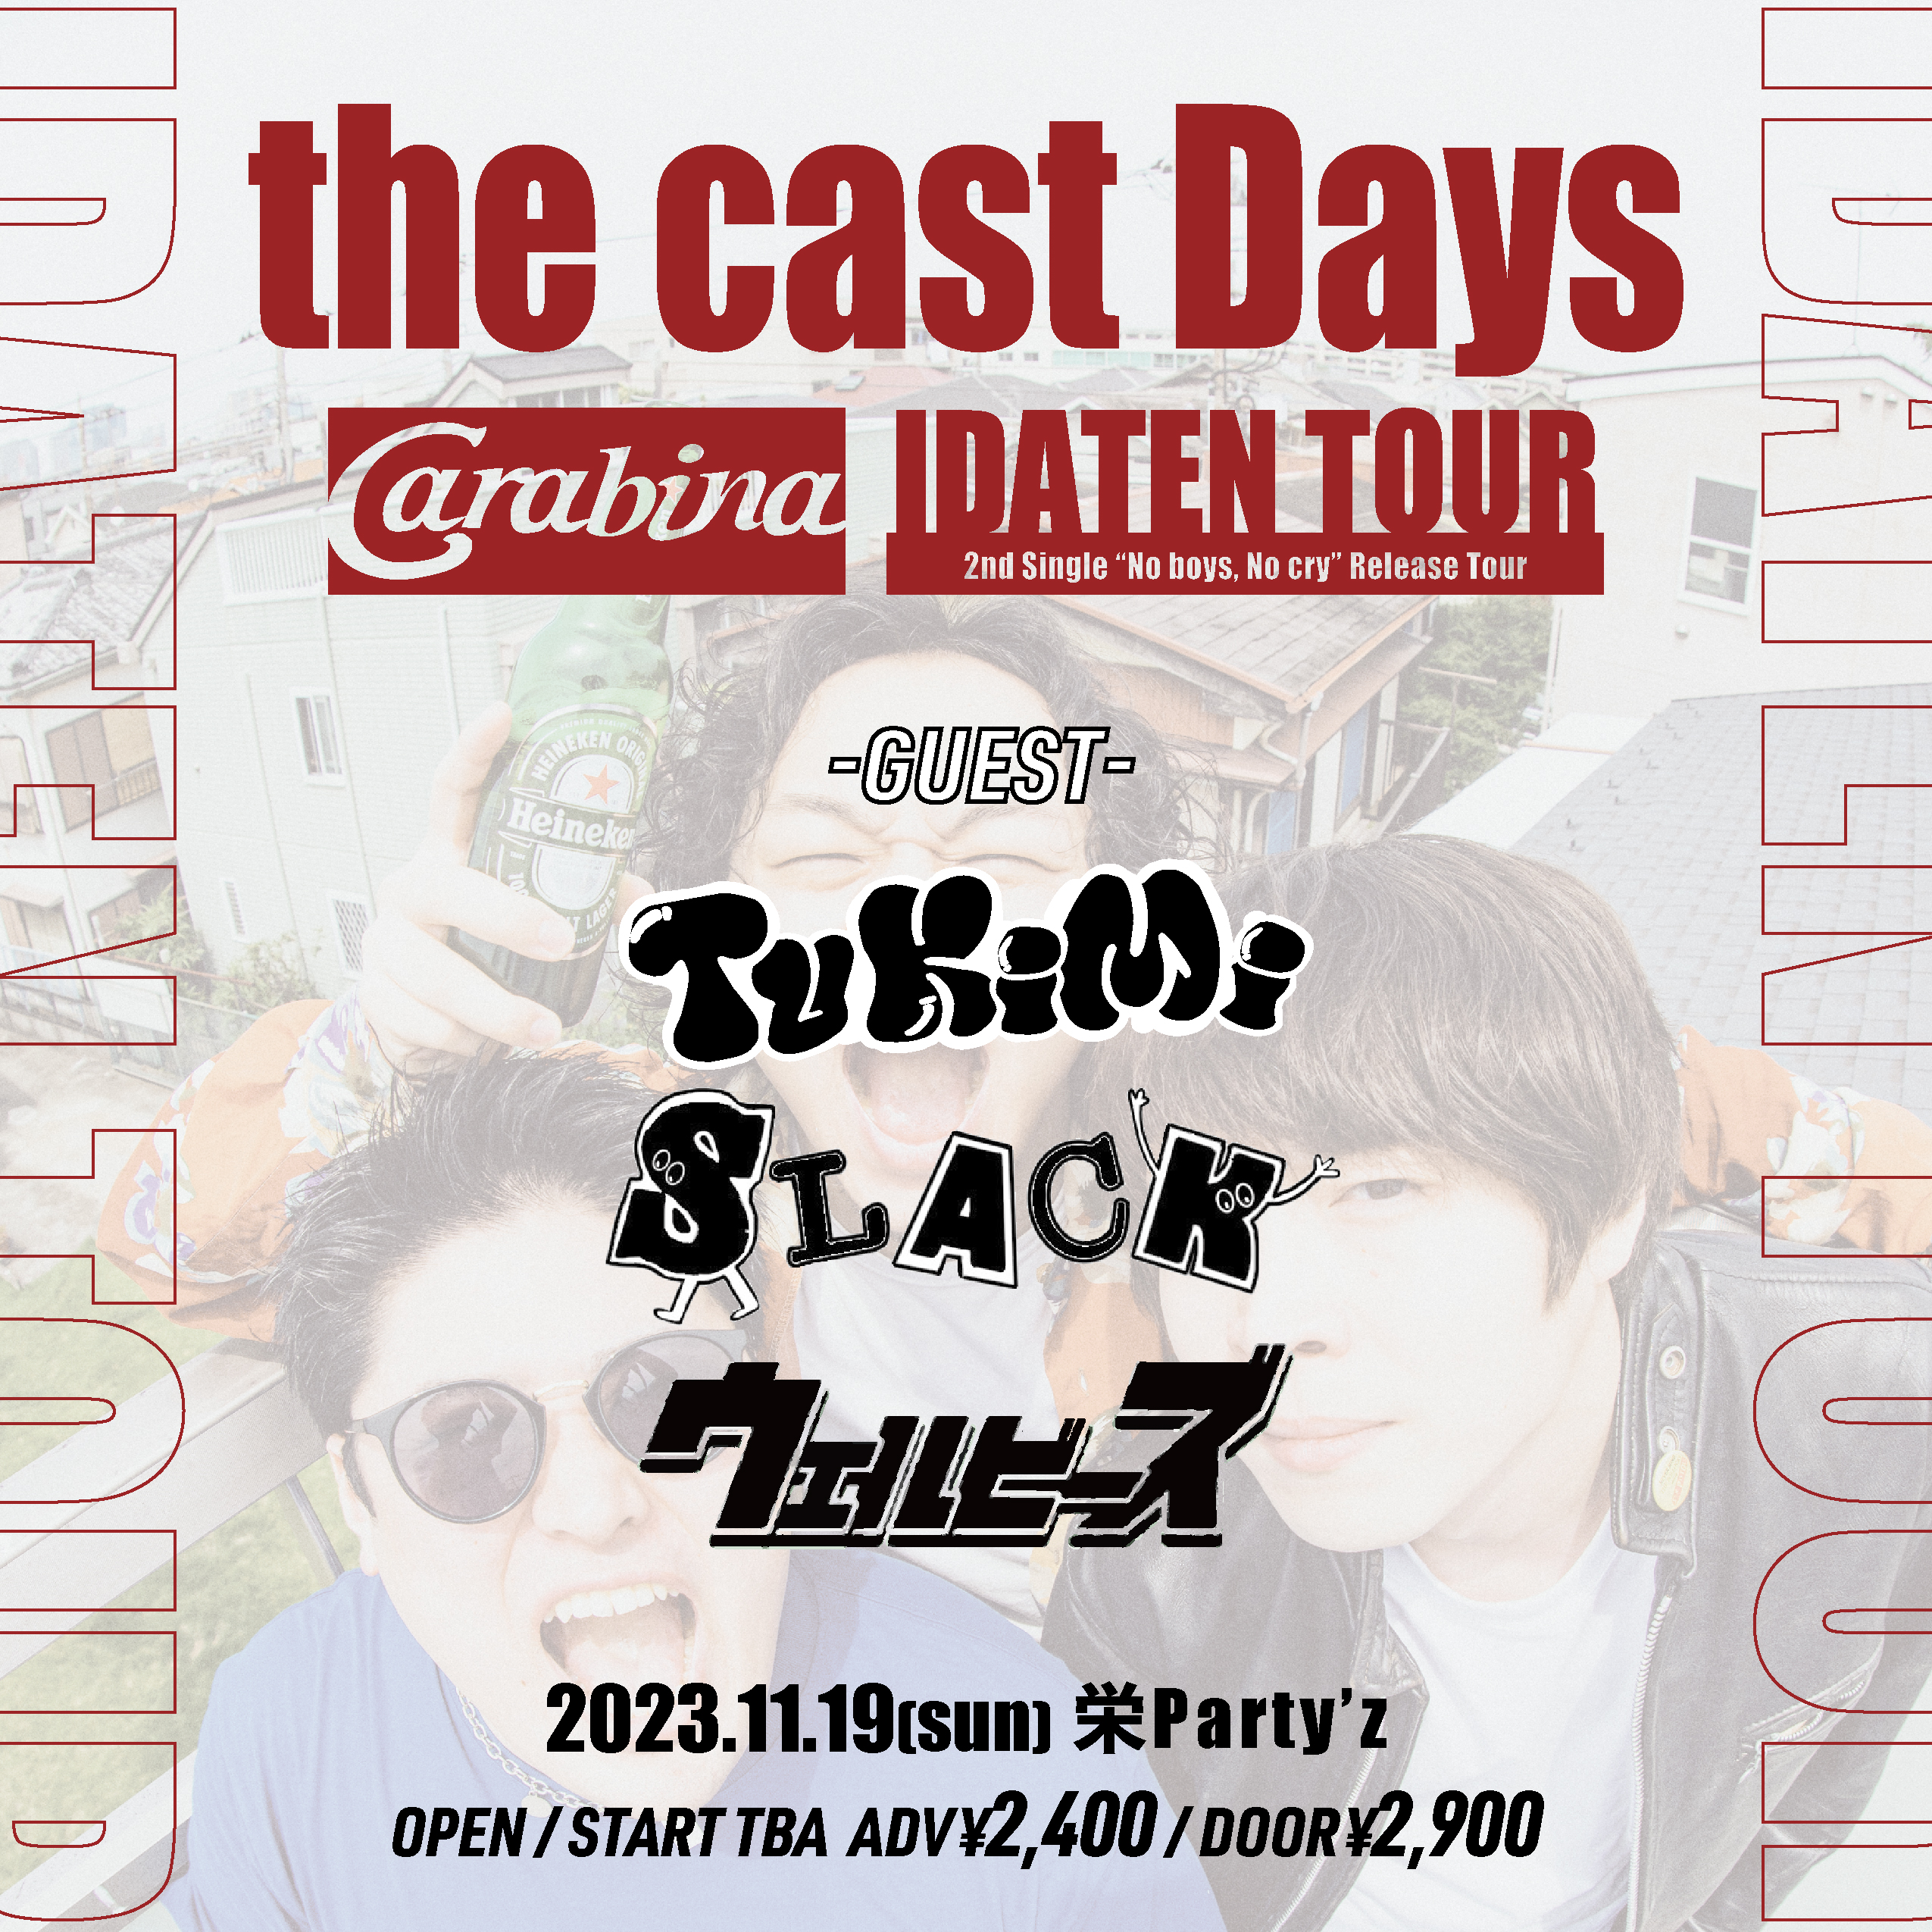 「the cast Days」 carabina  2nd Single”No boys,No cry”Release Tour IDATEN TOUR